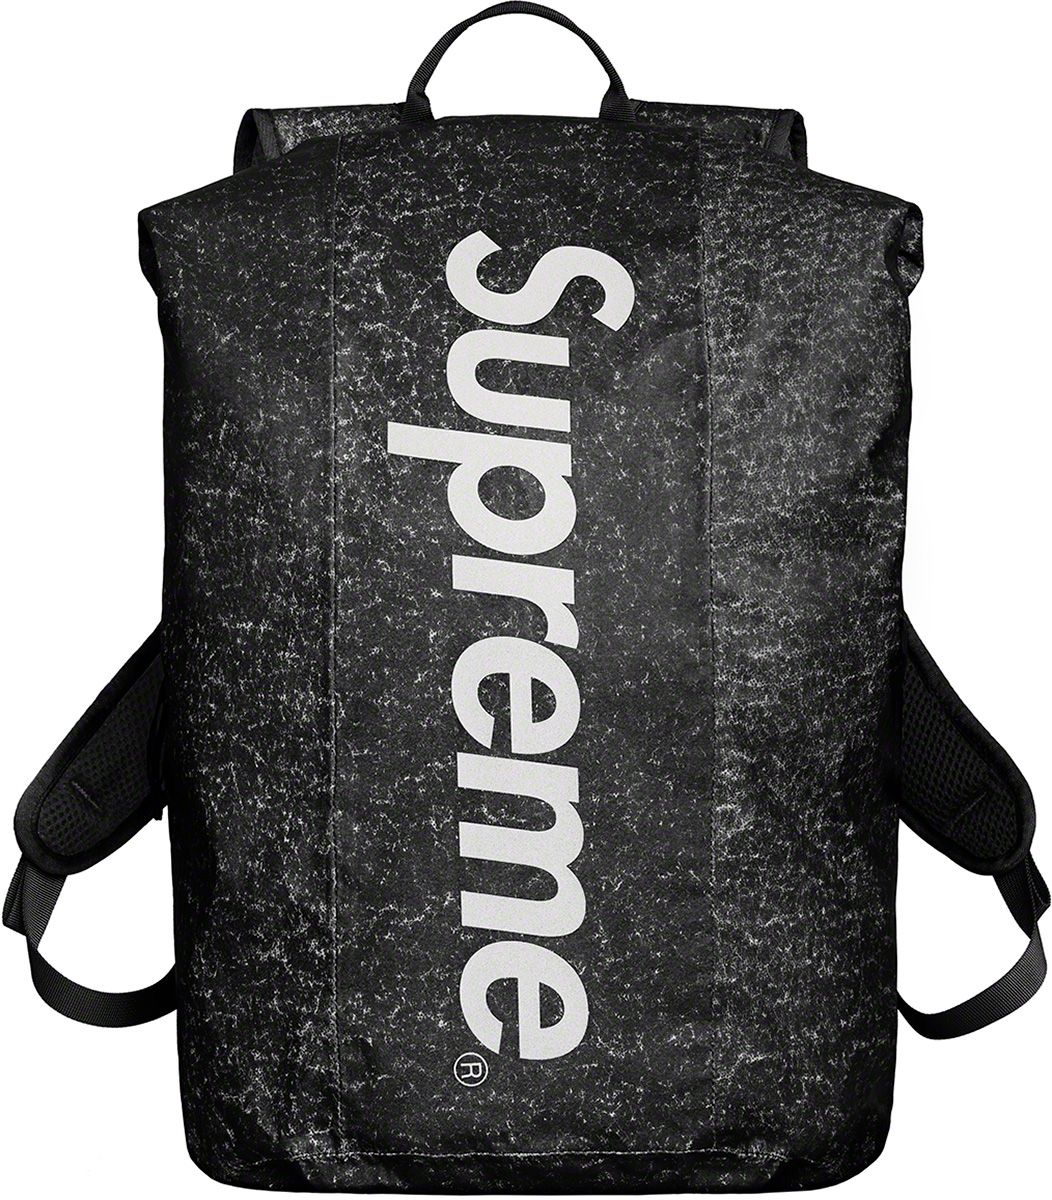 Waterproof Reflective Speckled Shoulder Bag - Fall/Winter 2020